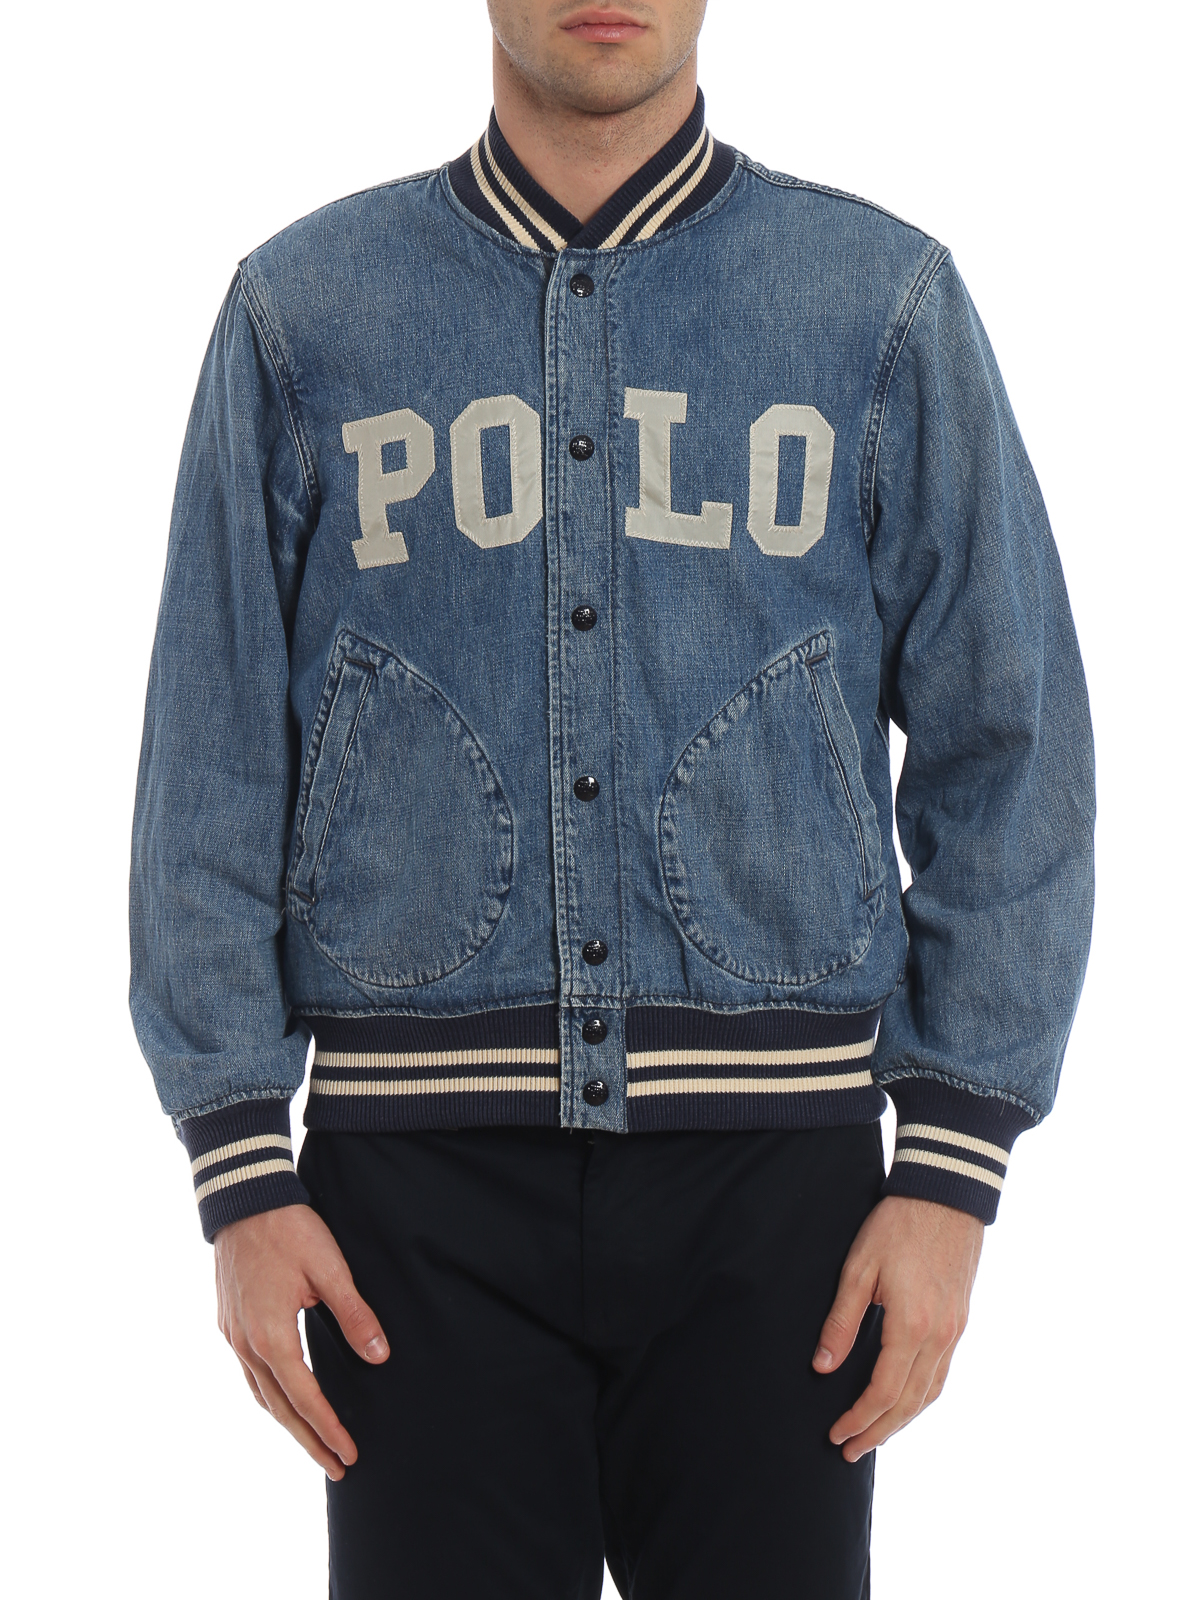 polo ralph lauren bomber jacket